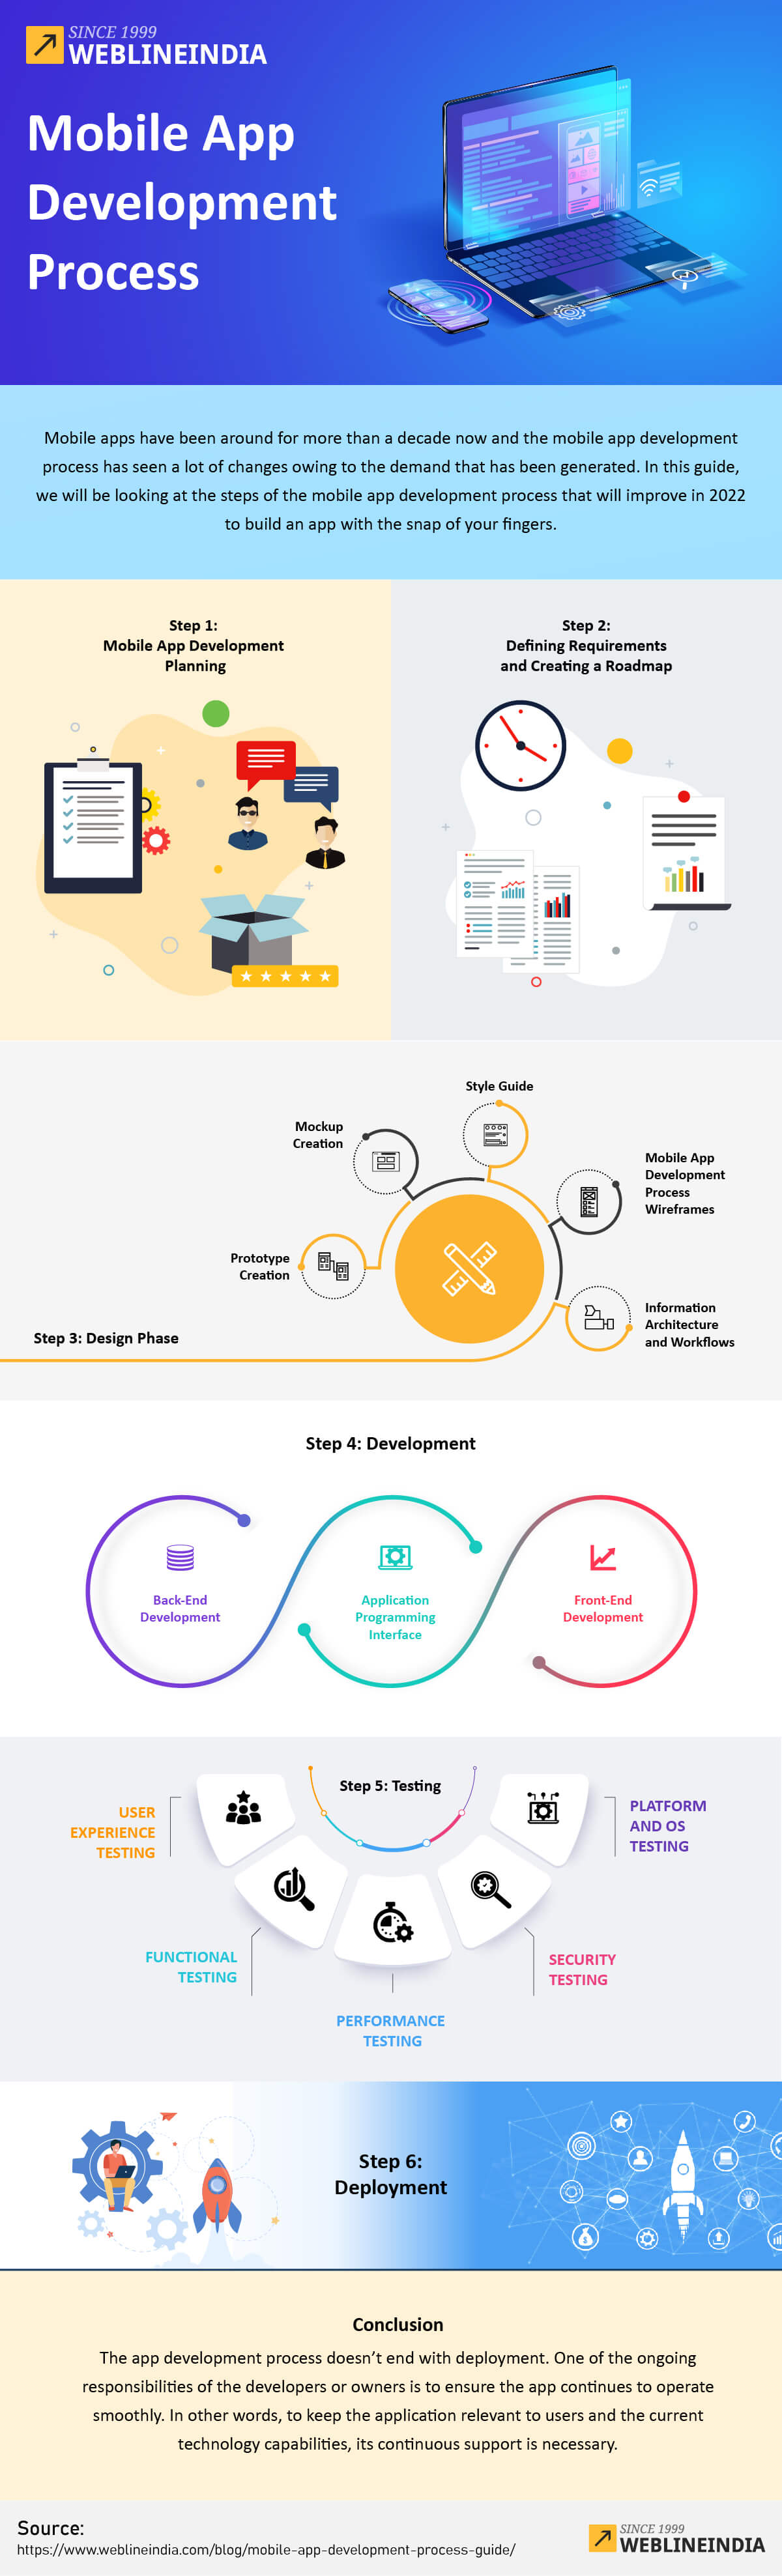 Mobile App Development Process Infographic